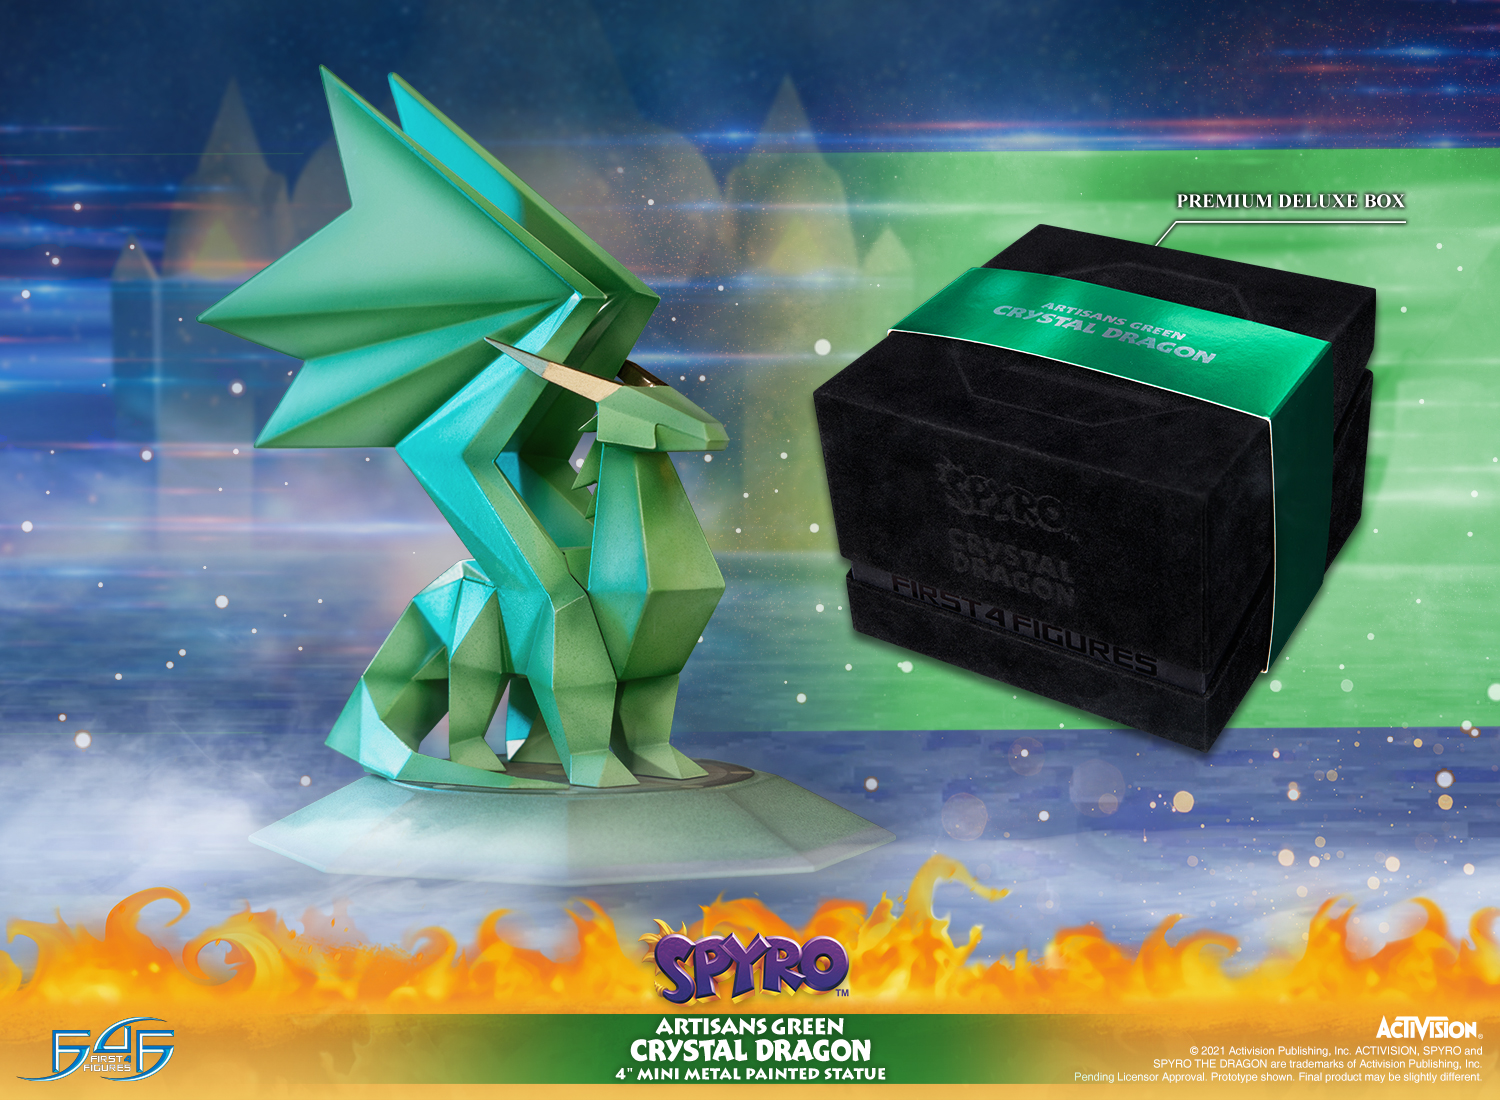 Artisans Green Crystal Dragon